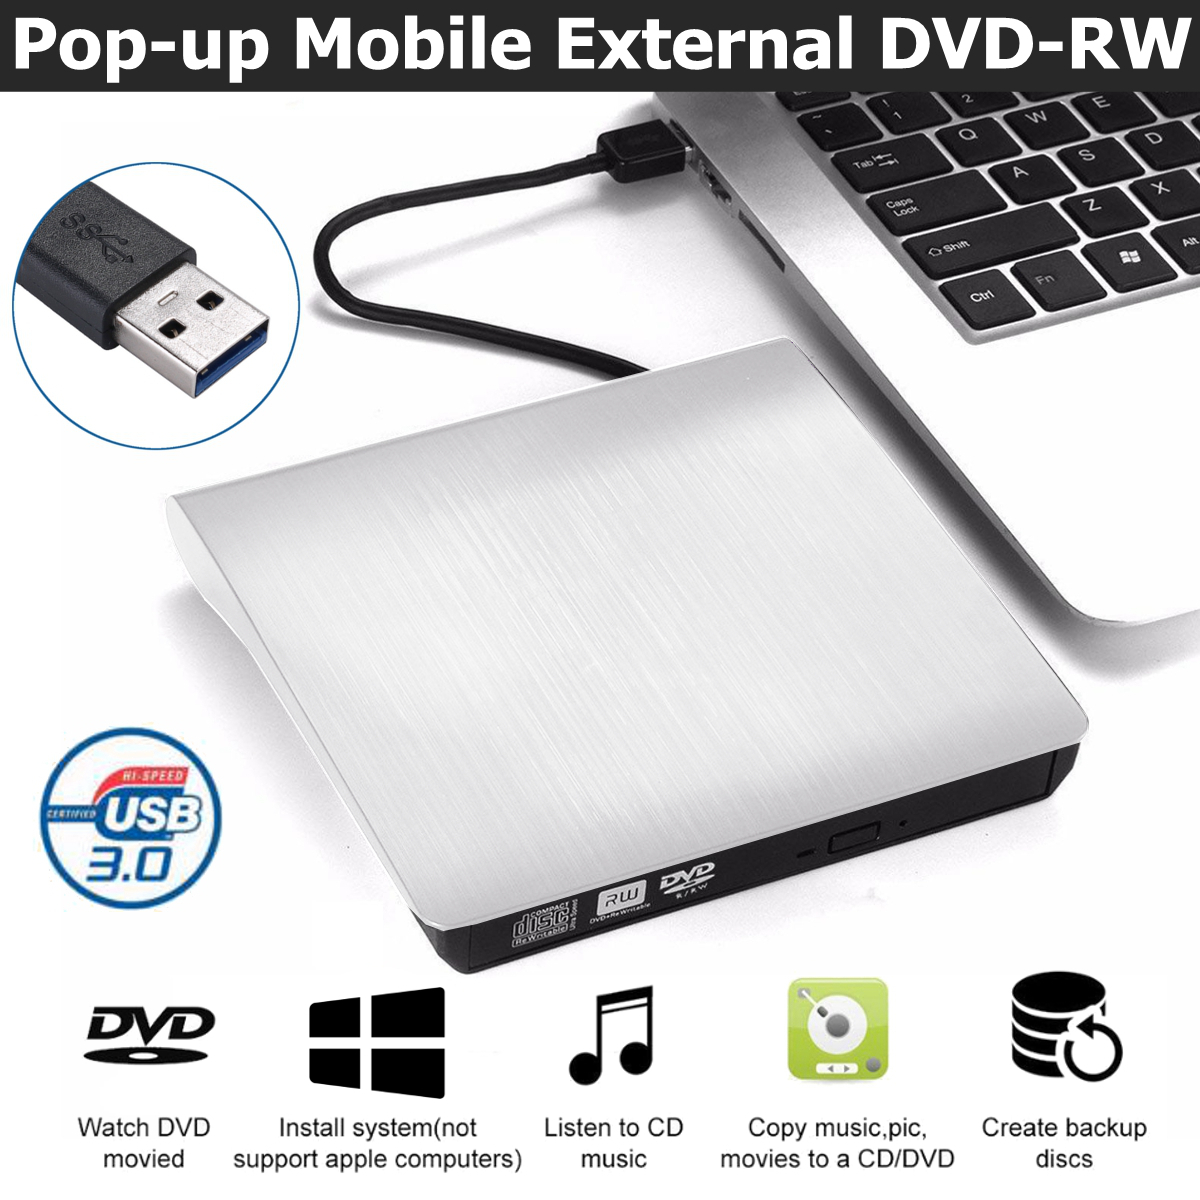 USB 3.0 Slim External DVD Optical Drive DVD-RW CD-RW Combo Drive Burner Reader Player 40